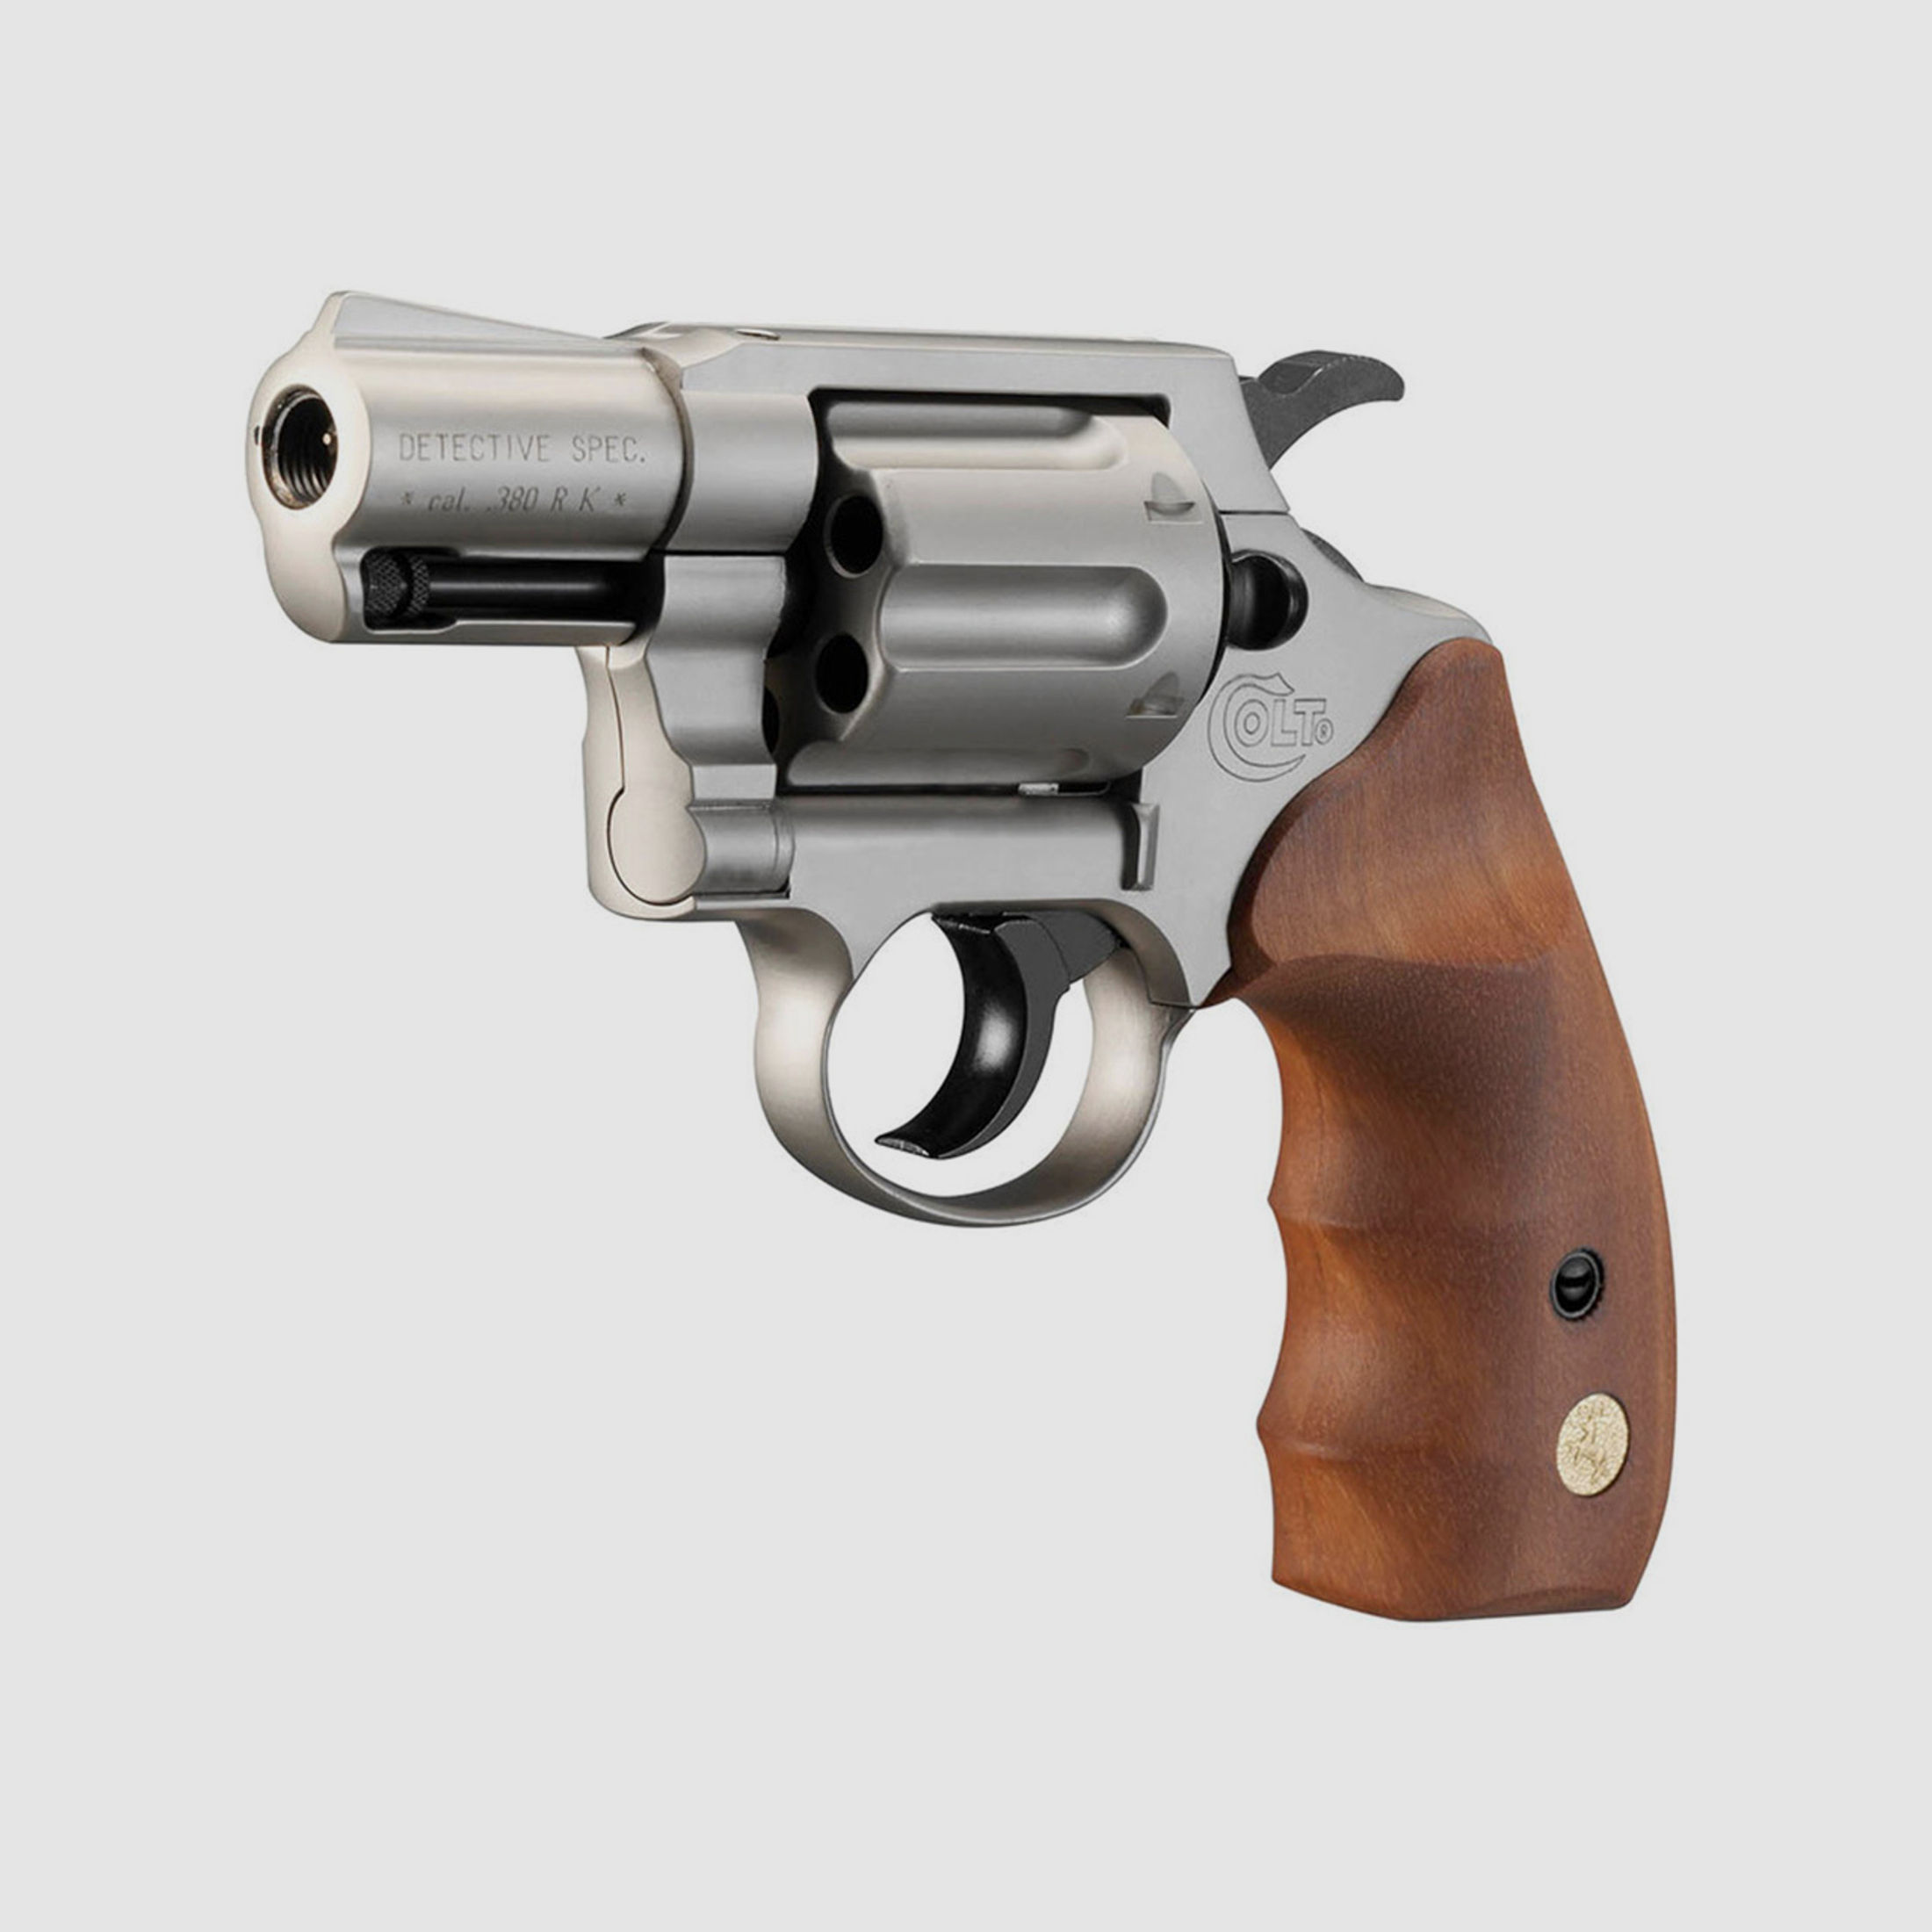 Schreckschuss Revolver Colt Detective Special Nickel Finish Holzgriffschalen Kaliber 9 mm R.K. (P18) + 50 Schuss